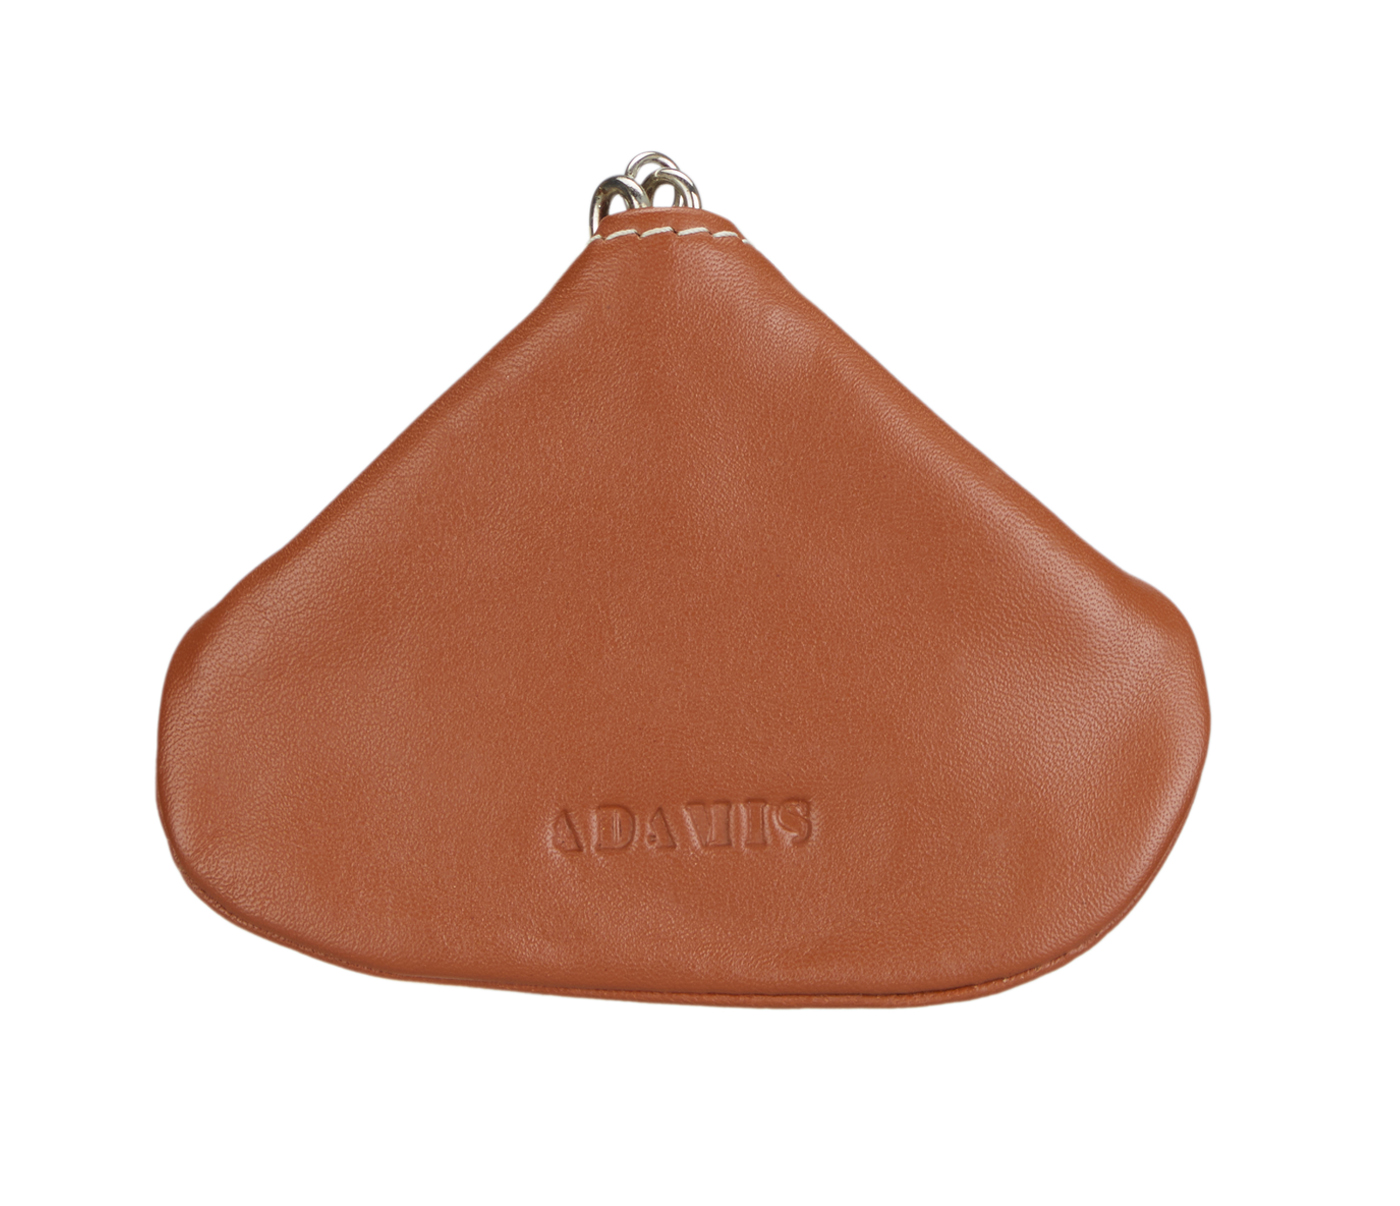 W100--Triangular shape mini coin purse in Genuine Leather - Tan